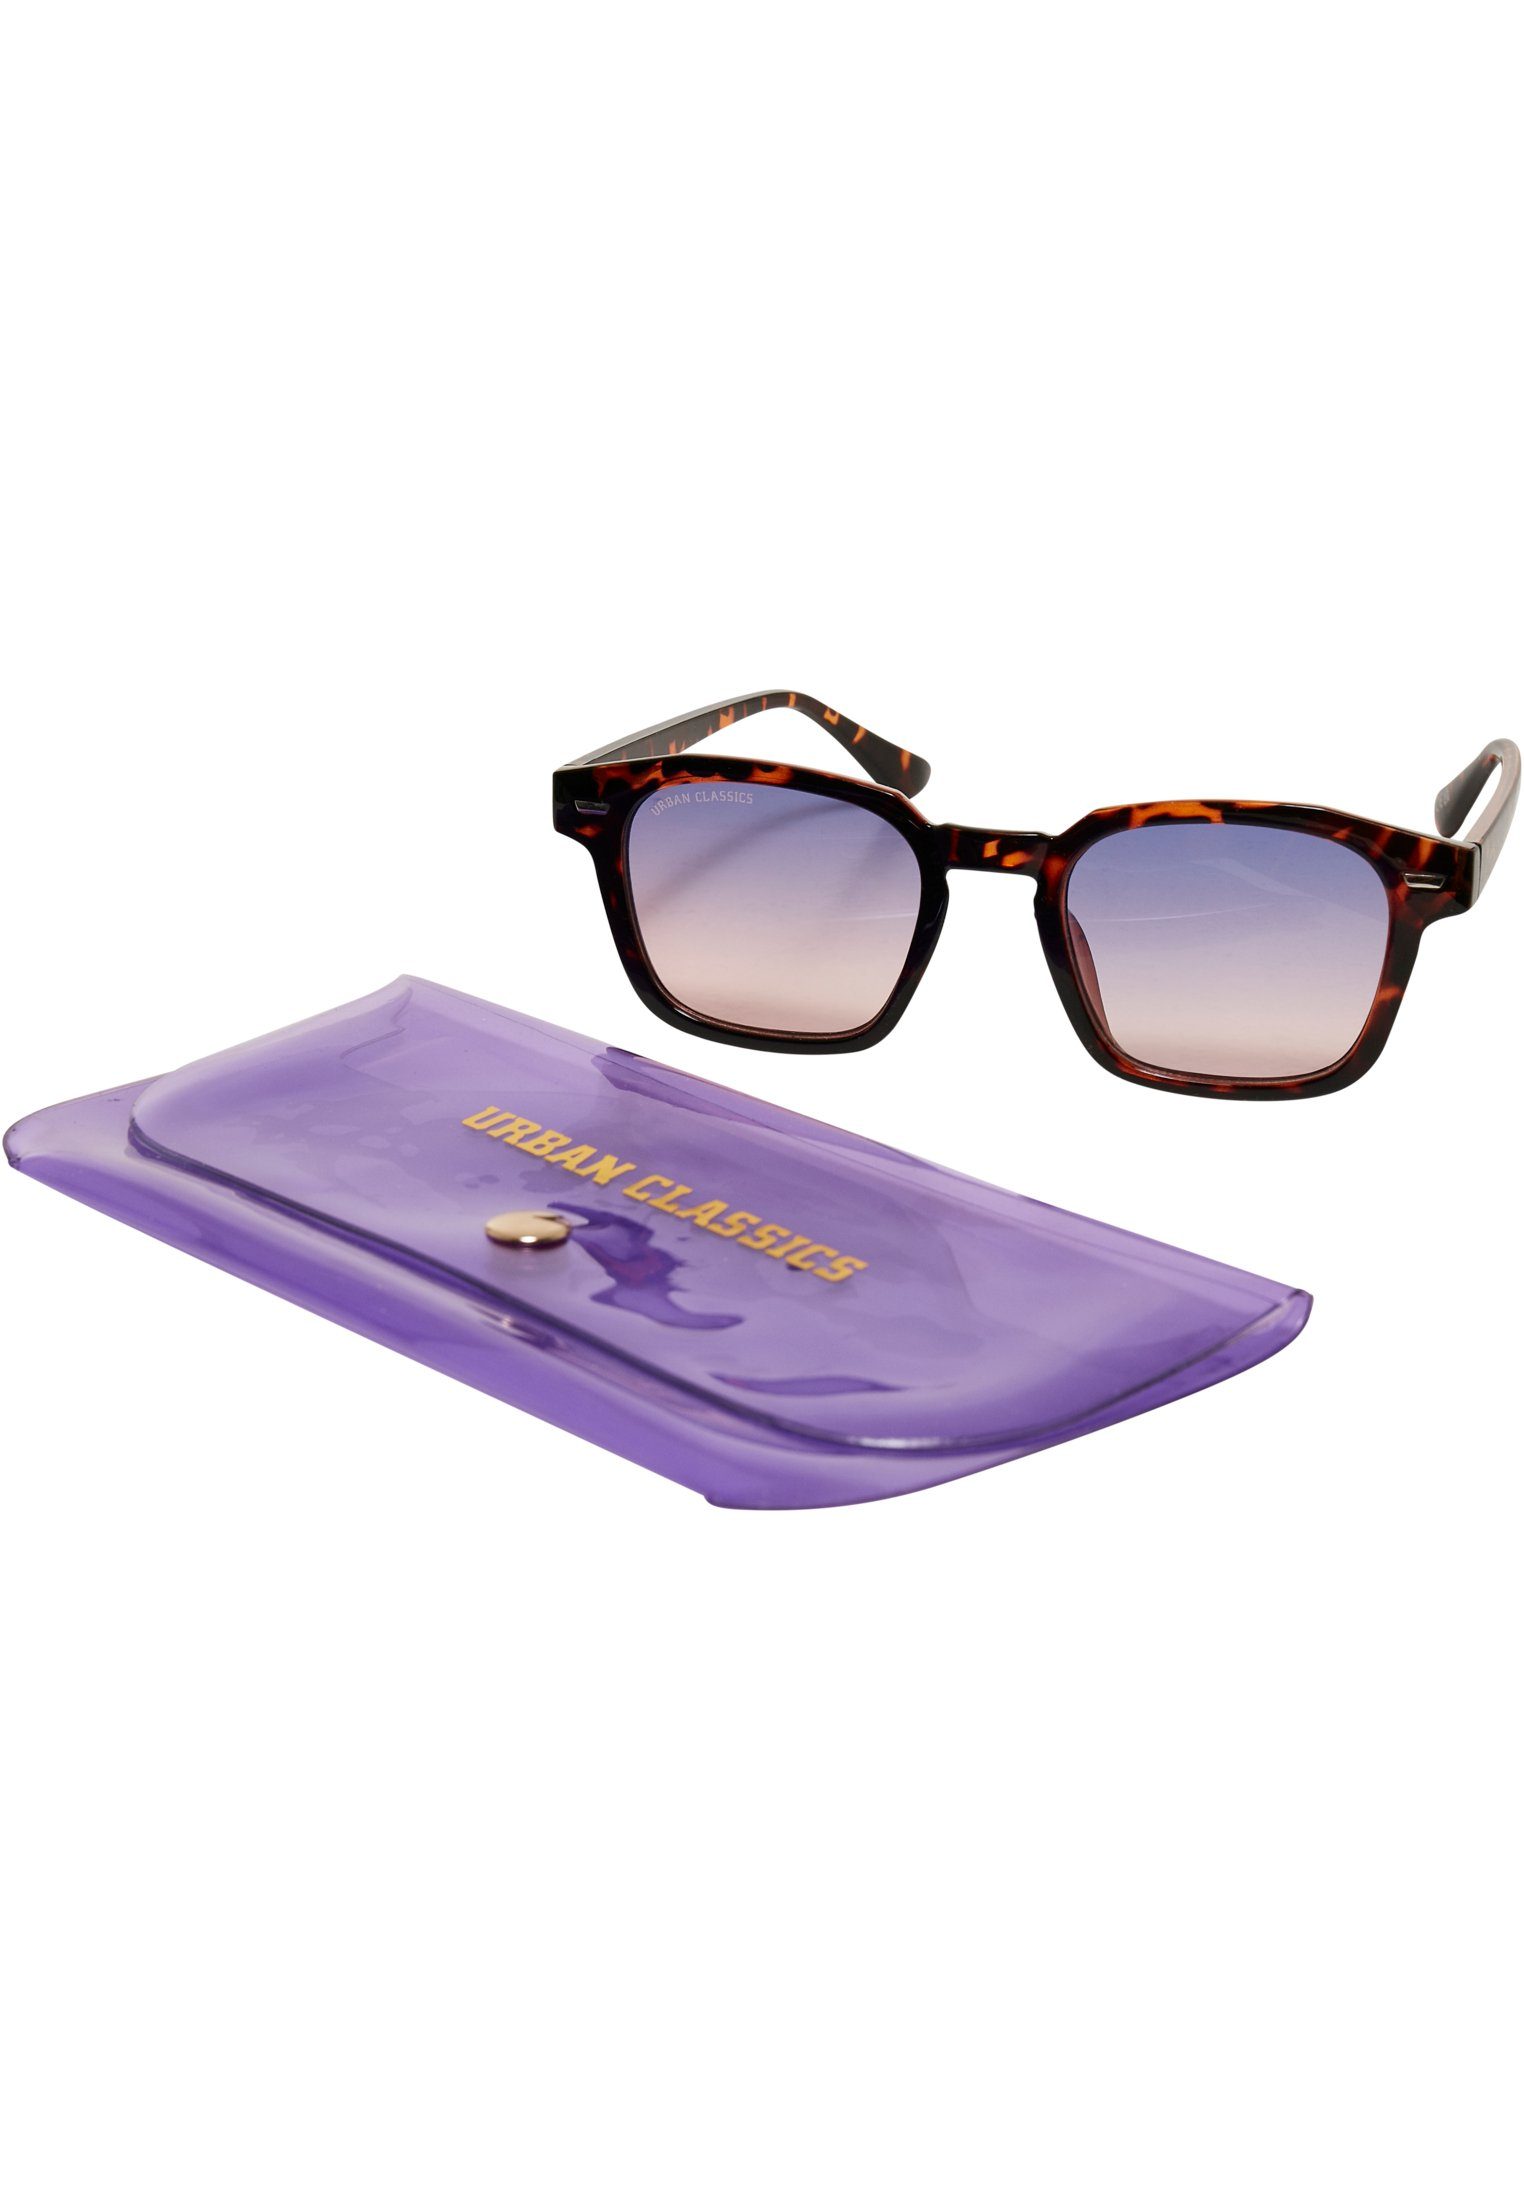 URBAN CLASSICS Sonnenbrille Unisex Sunglasses Maui With Case amber/lilac